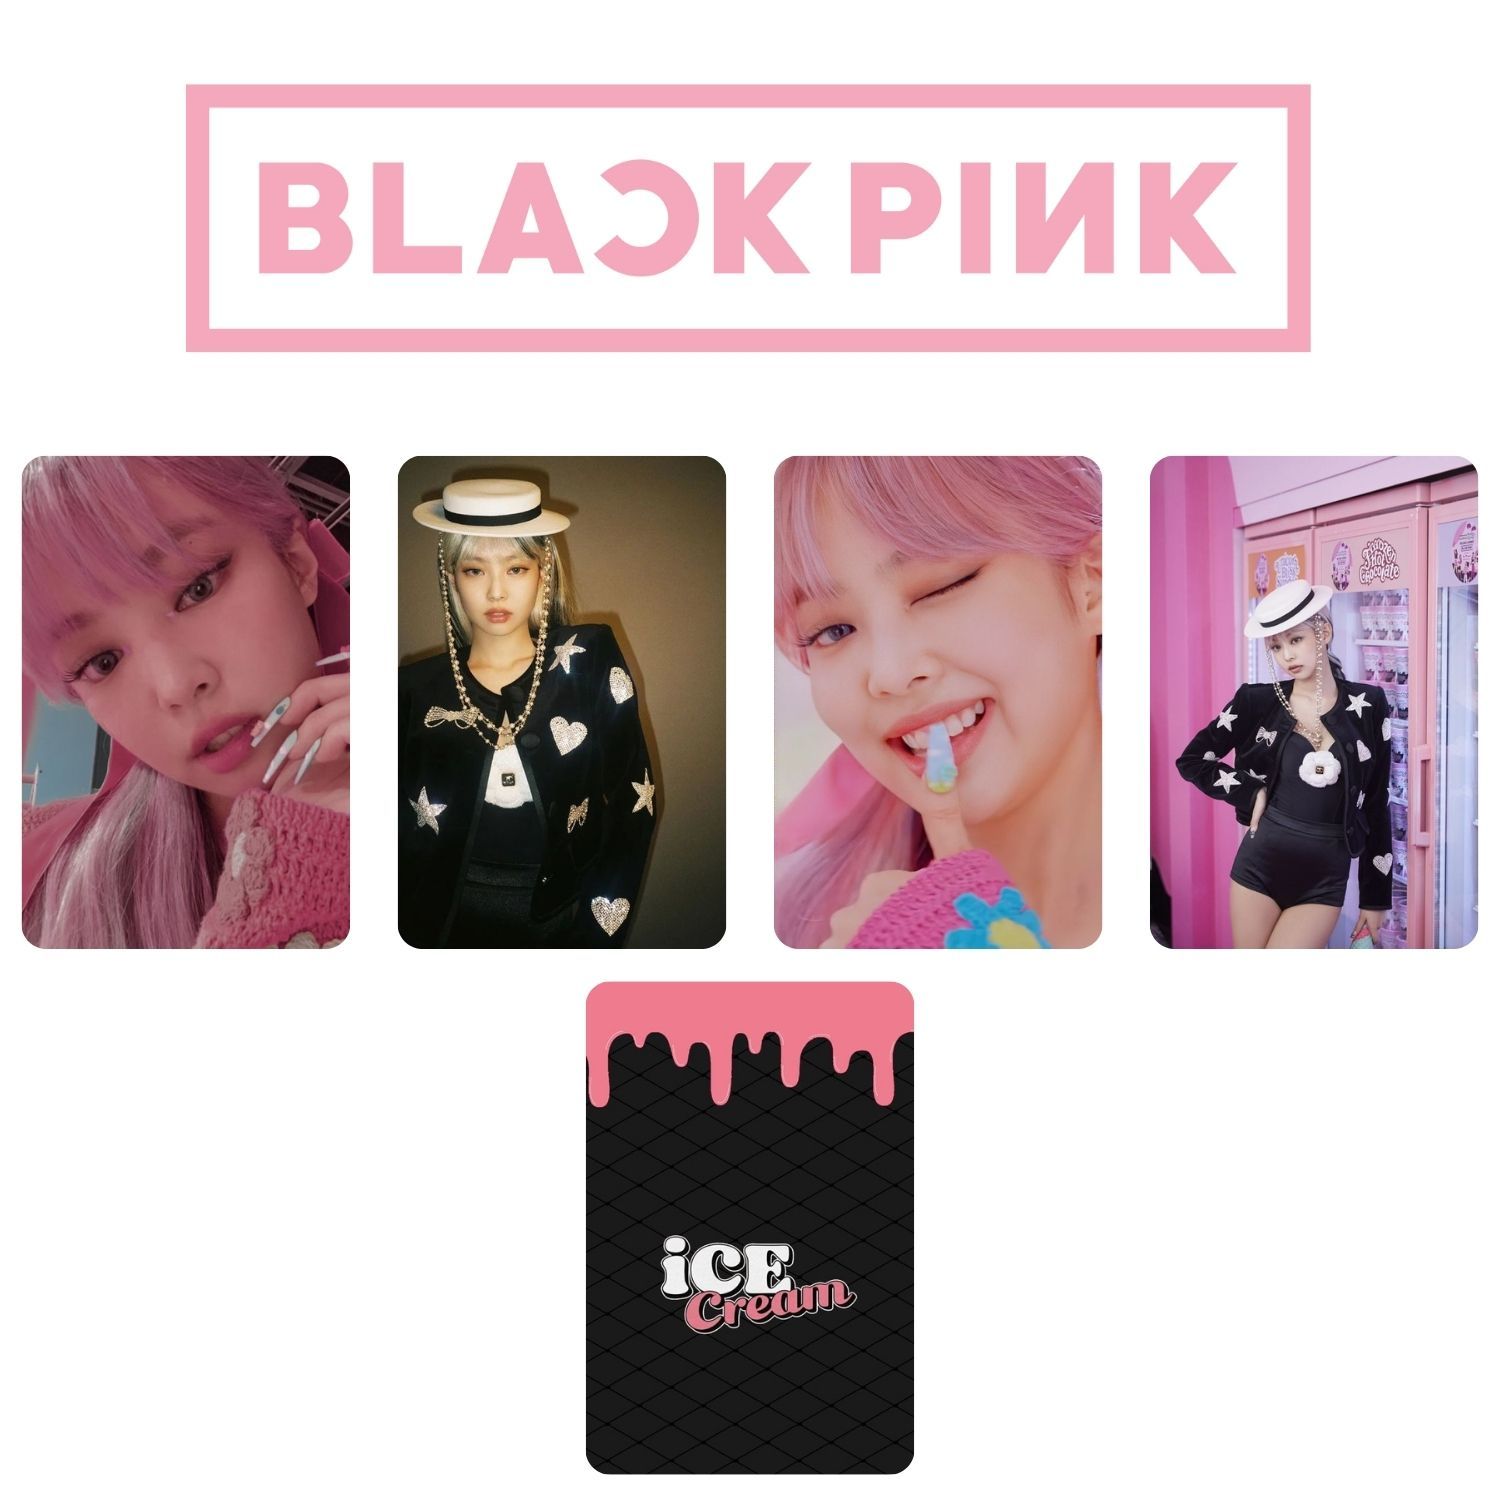 BLACKPINK Jennie '' Ice Cream '' PC Set